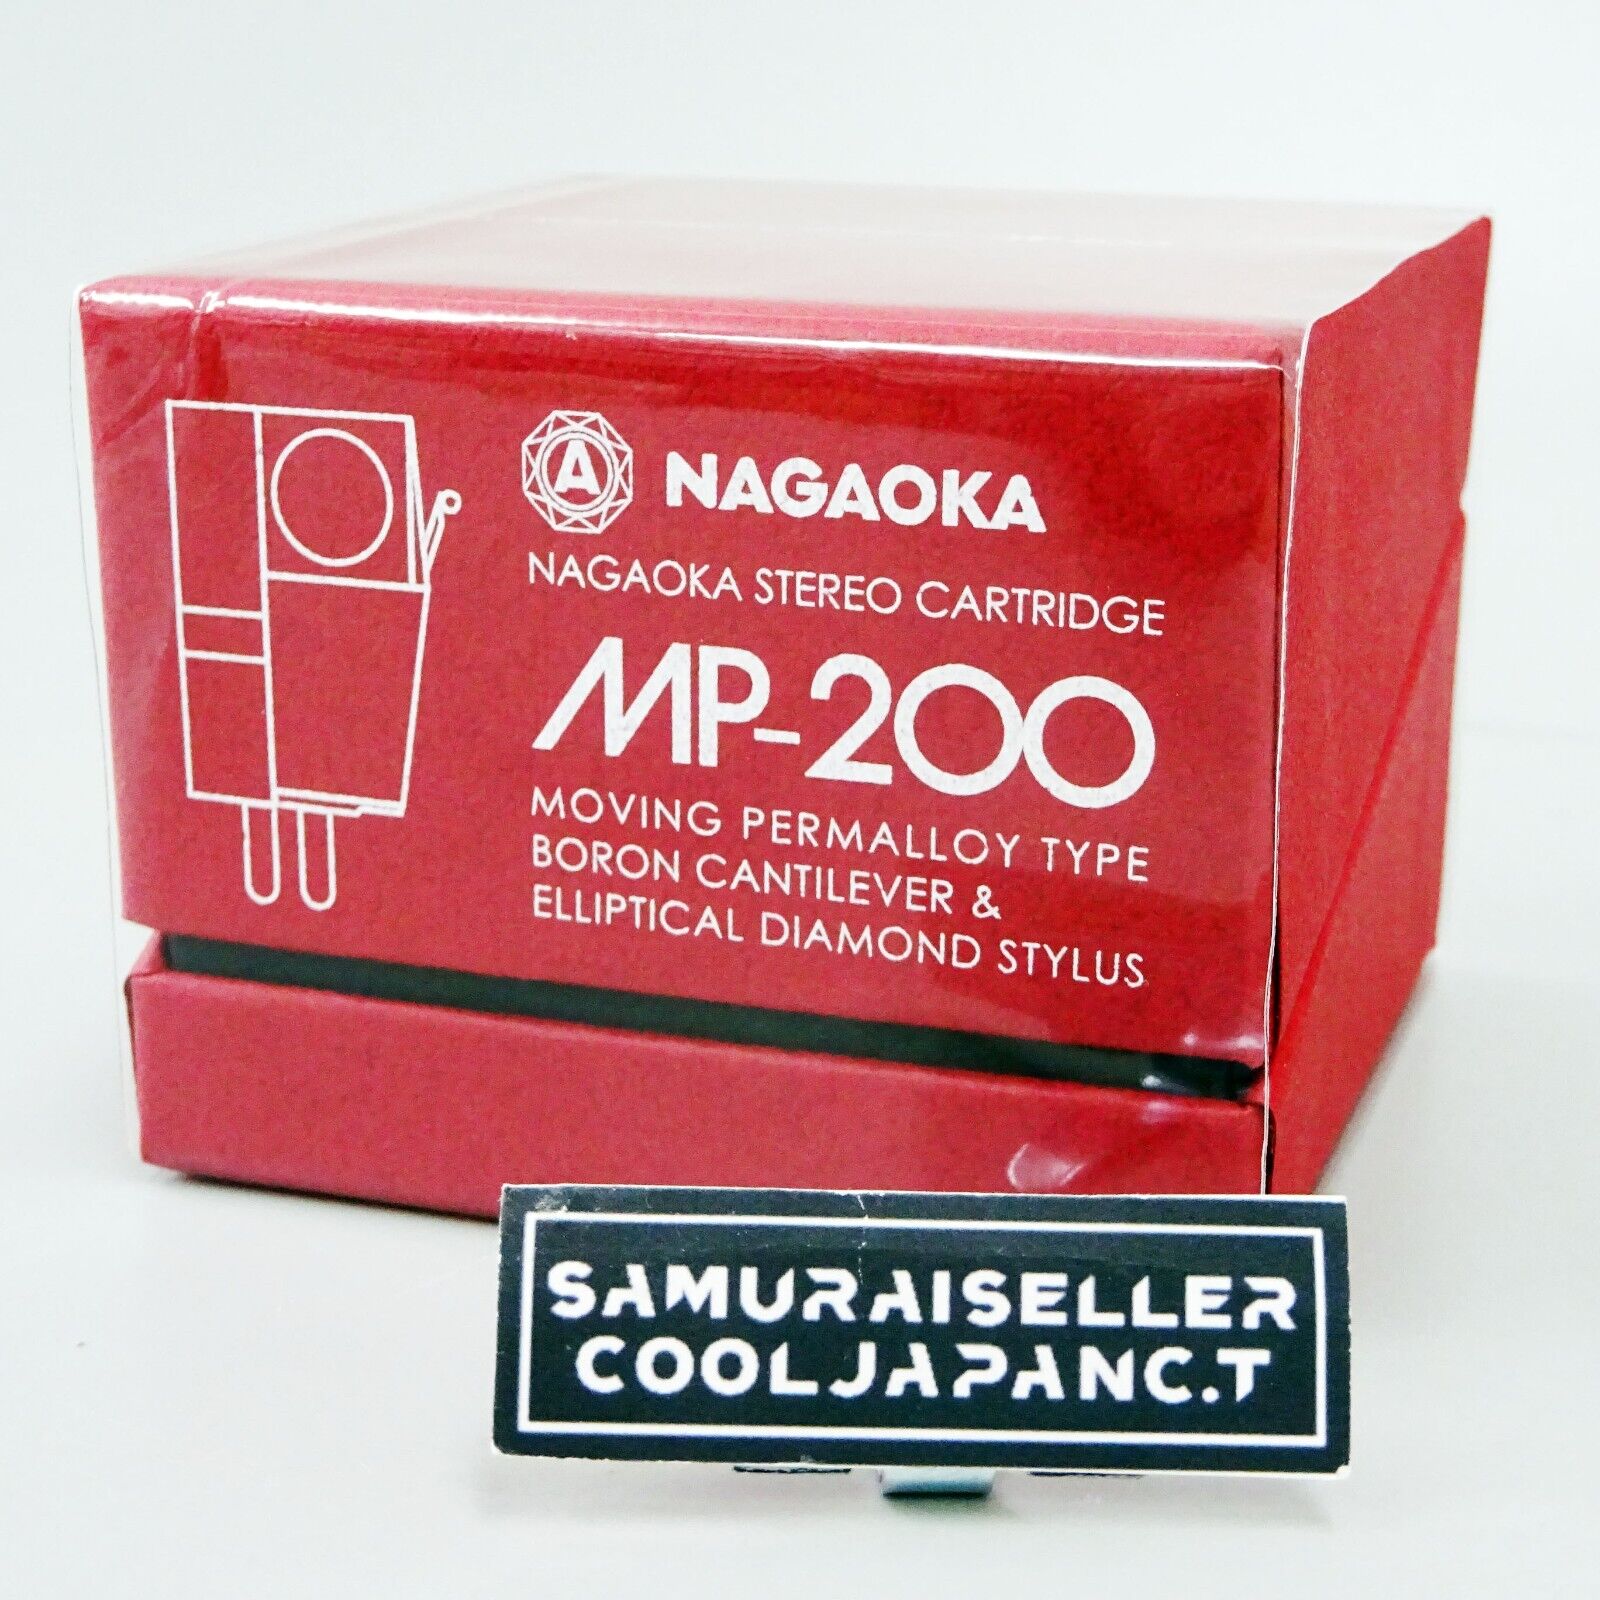  NAGAOKA MP-200 CARTRIDGE from Japan NEW